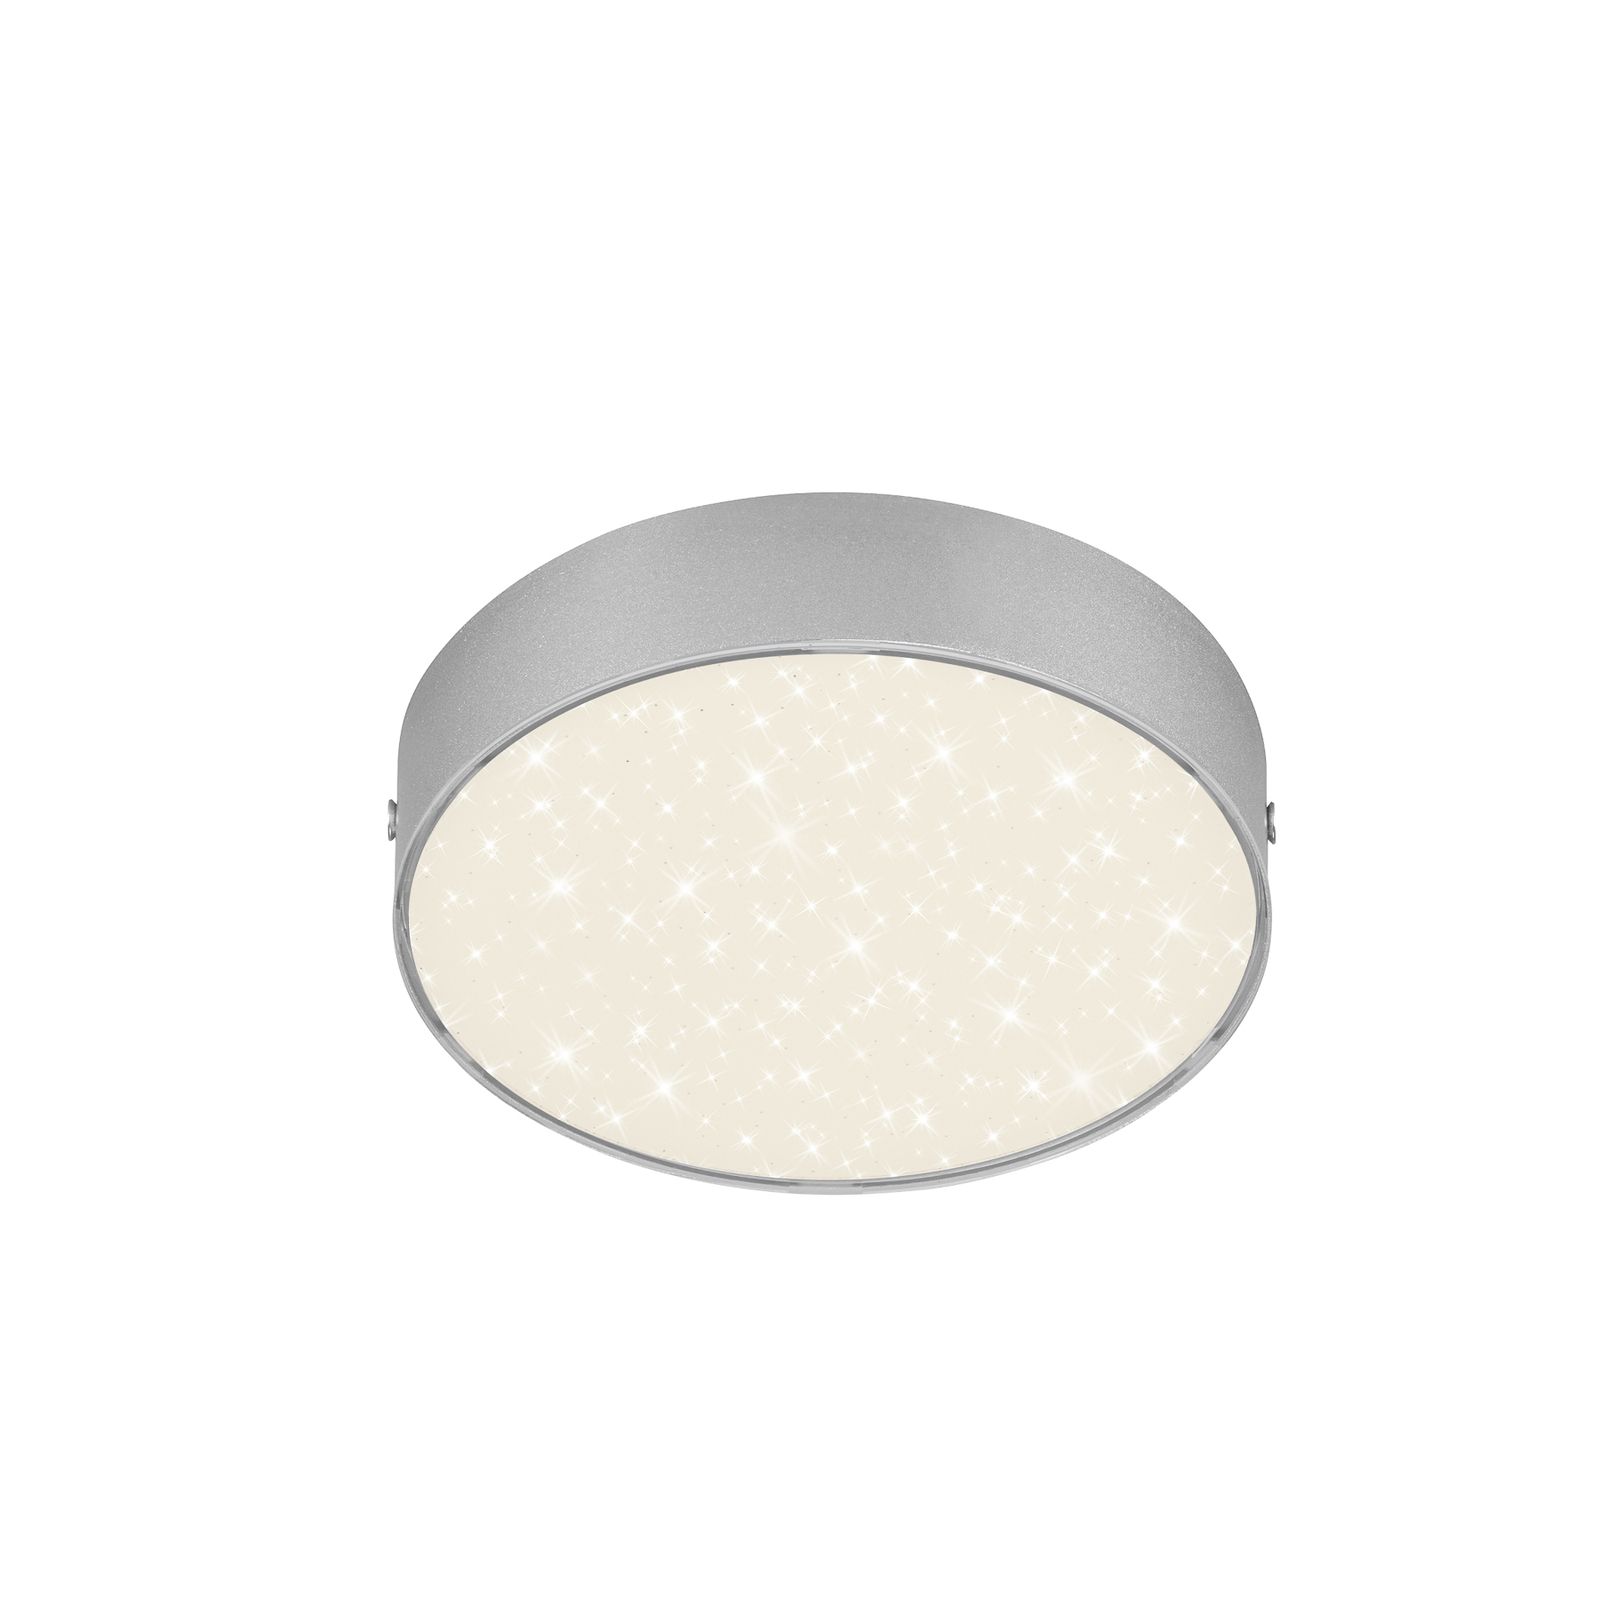 Lampa sufitowa LED Flame Star, Ø 15,7 cm, srebrna